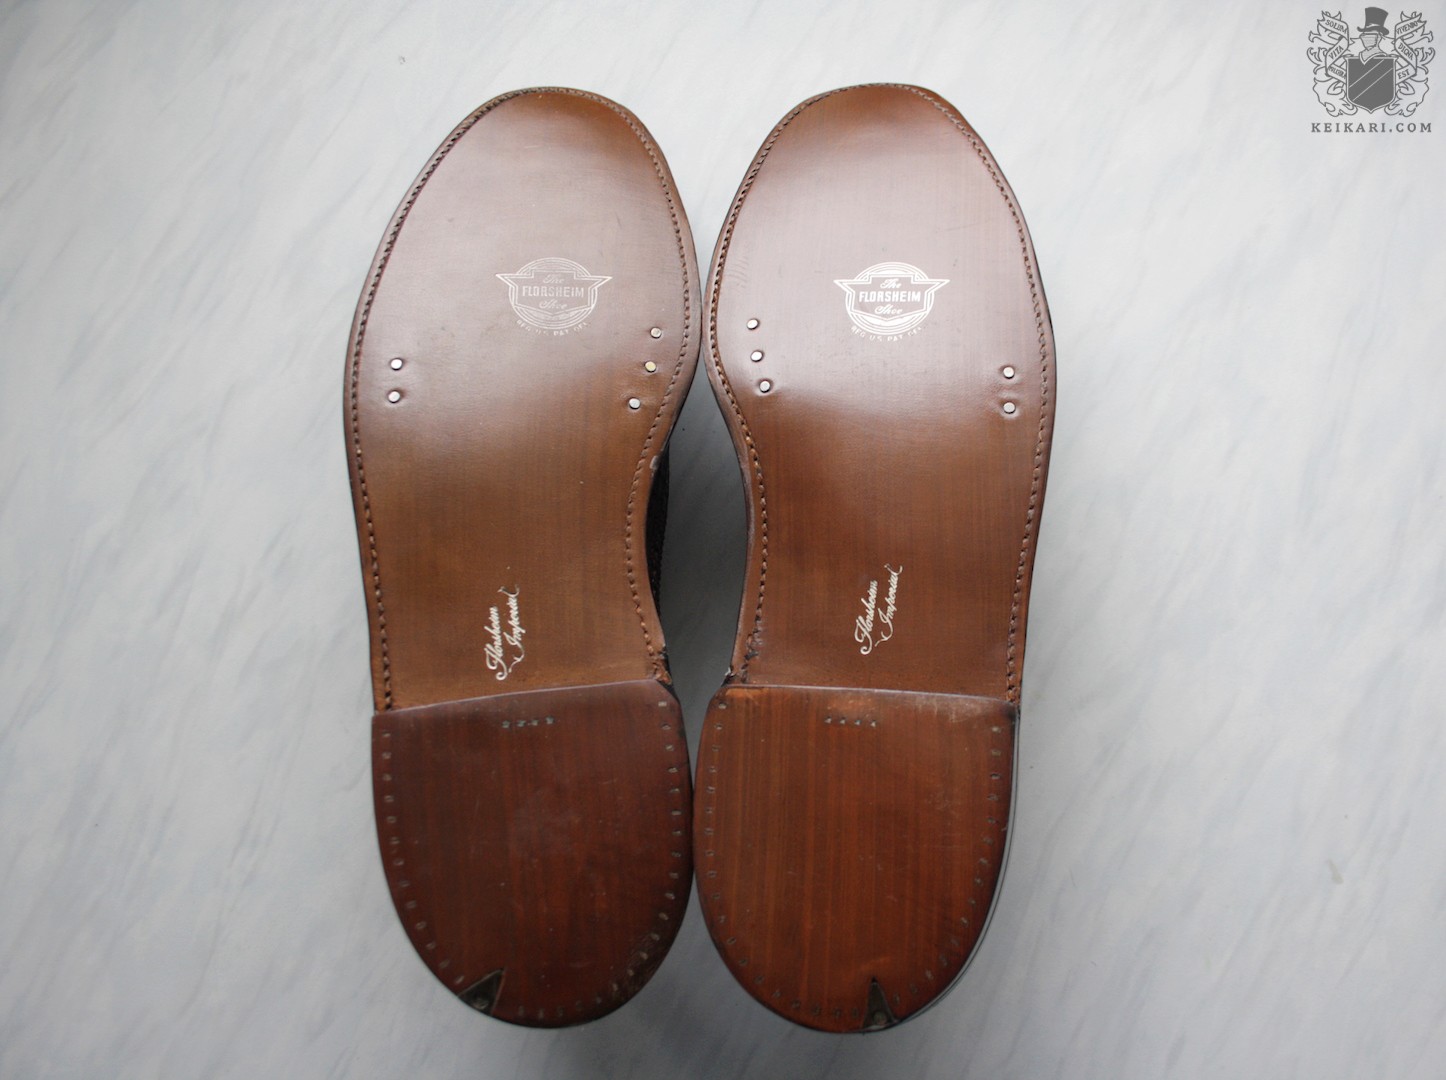 Vintage_Florsheim_sharkskin_leather_shoes_at_Keikari_dot_com12.jpg